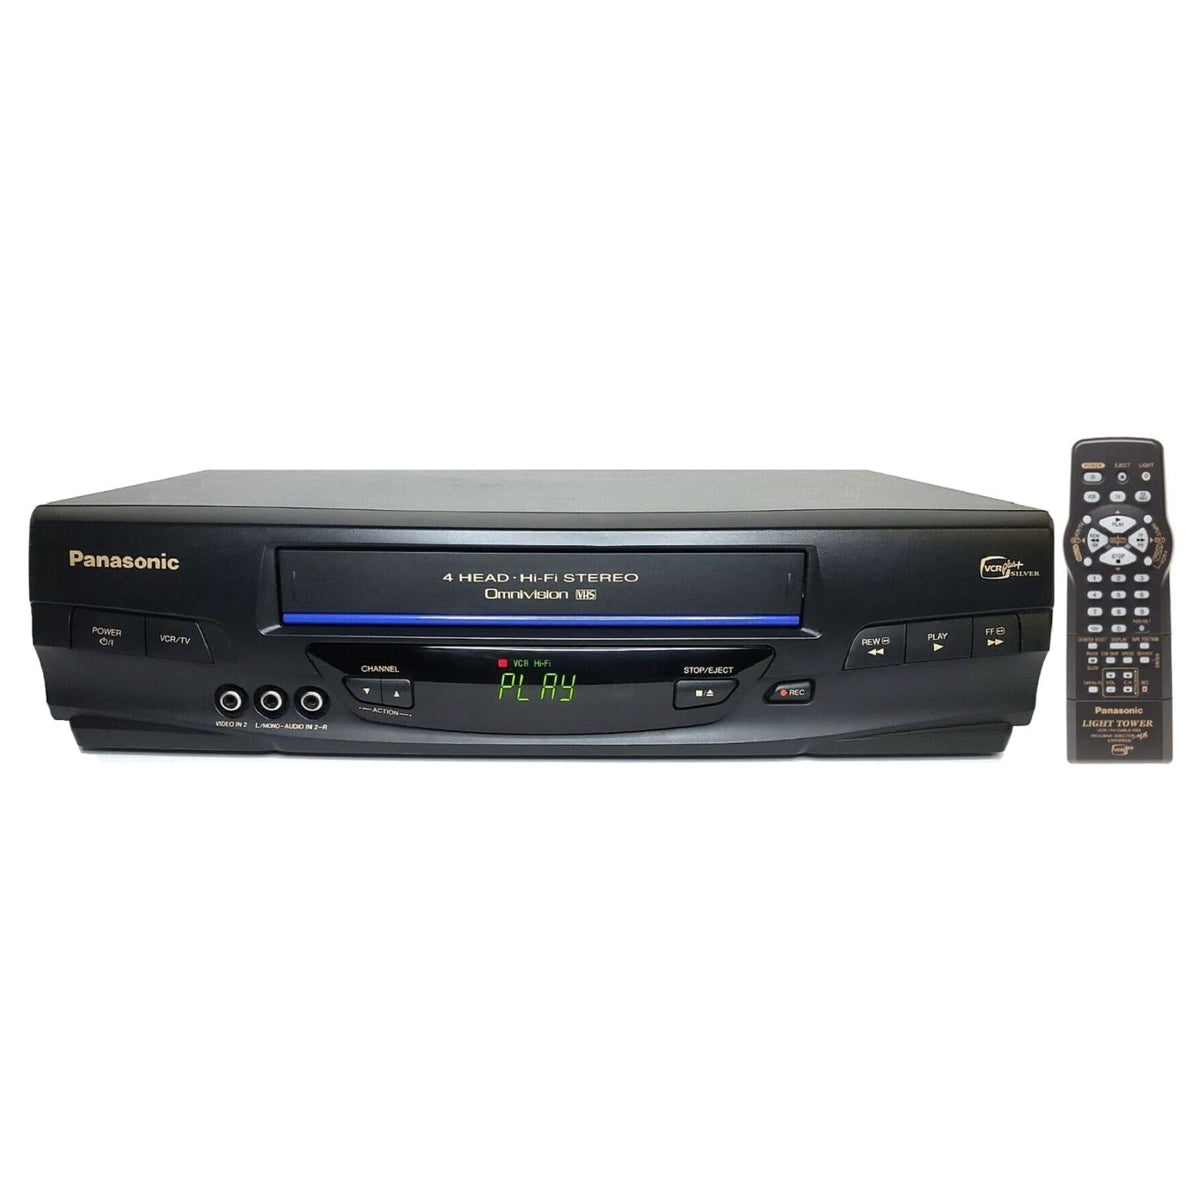 Panasonic PV-V4540 4-Head Hi-Fi VCR 